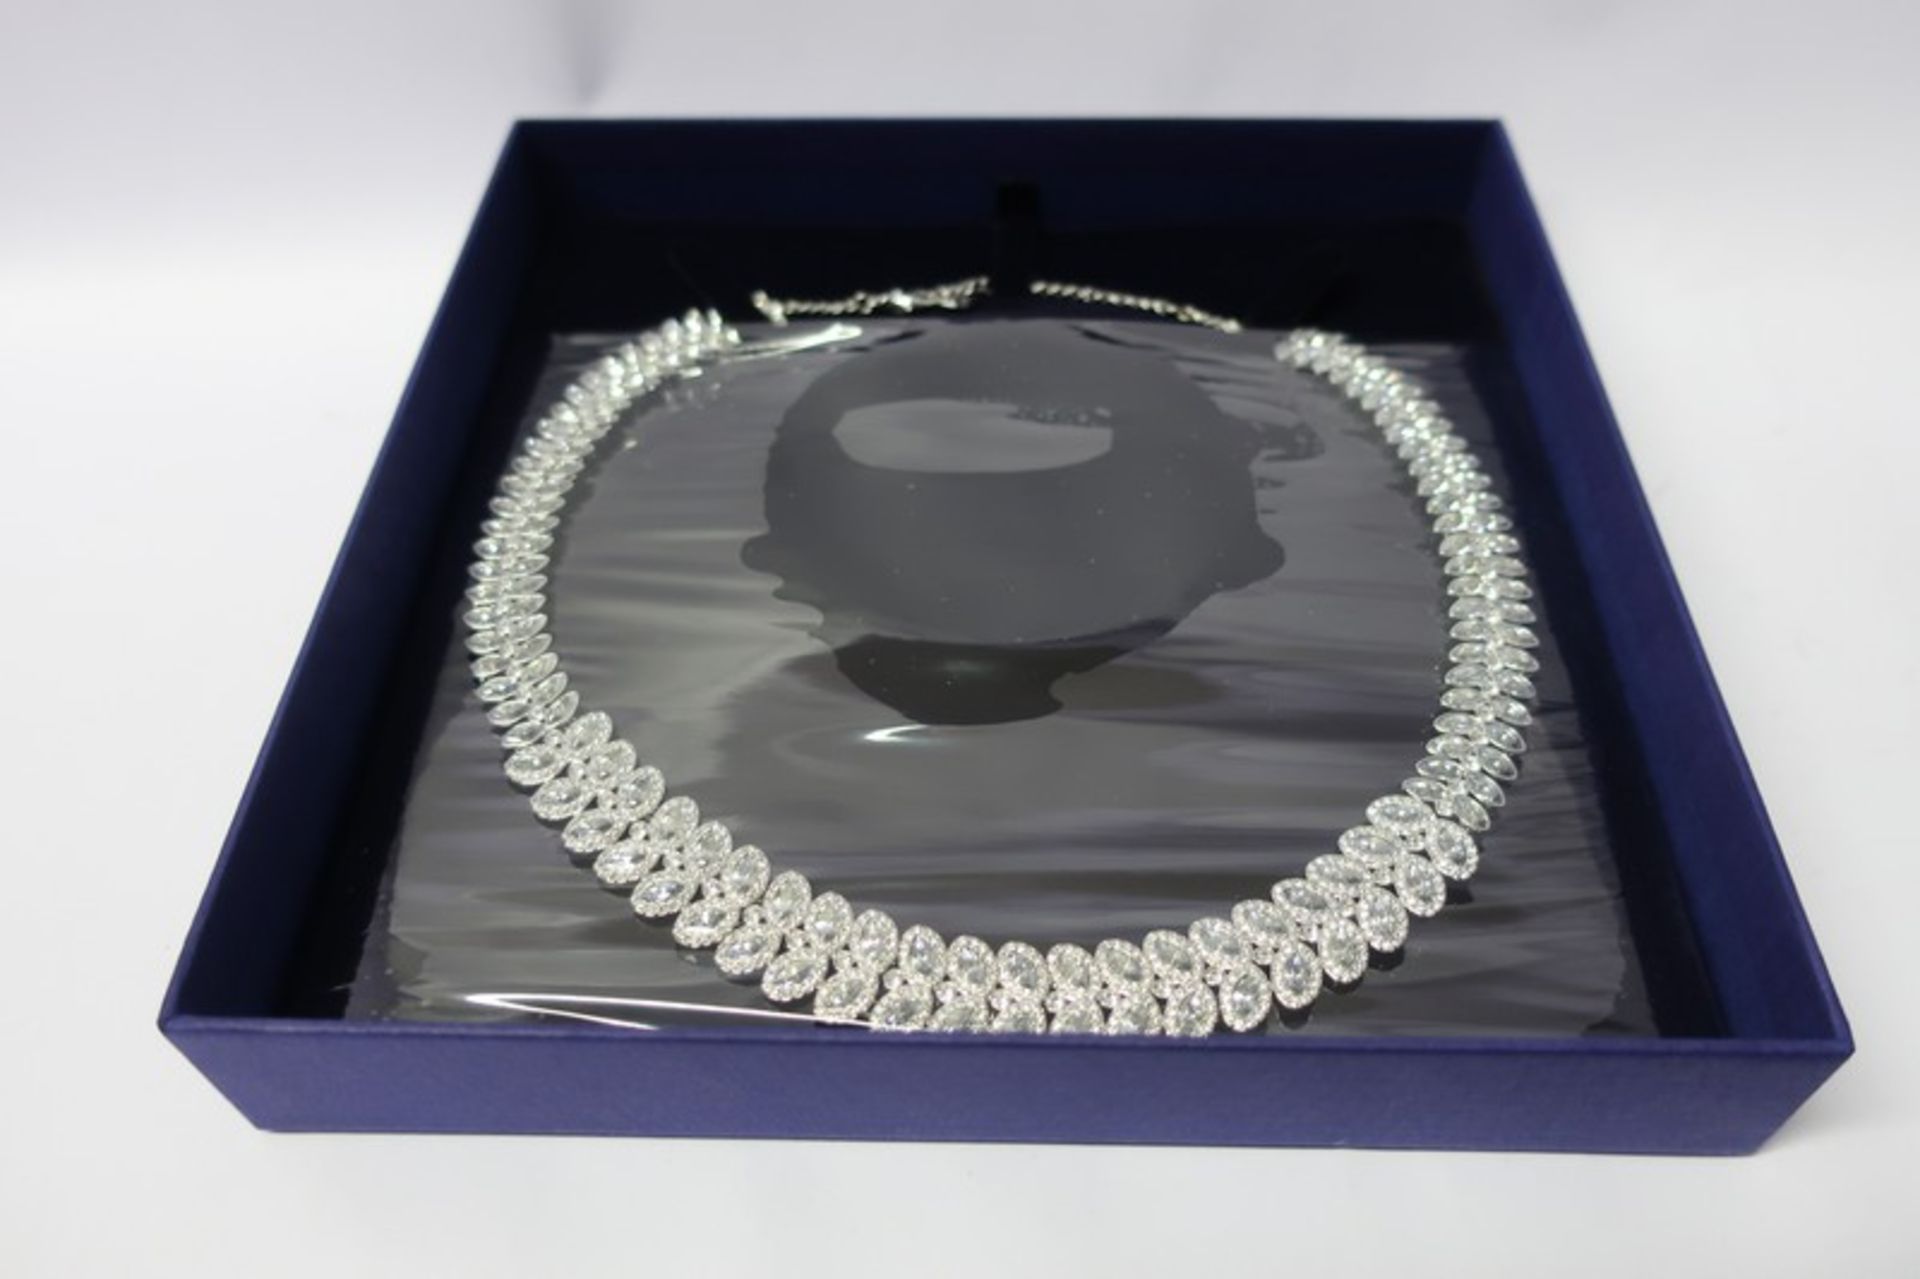 A Swarovski baron all-around crystal necklace (5117678).